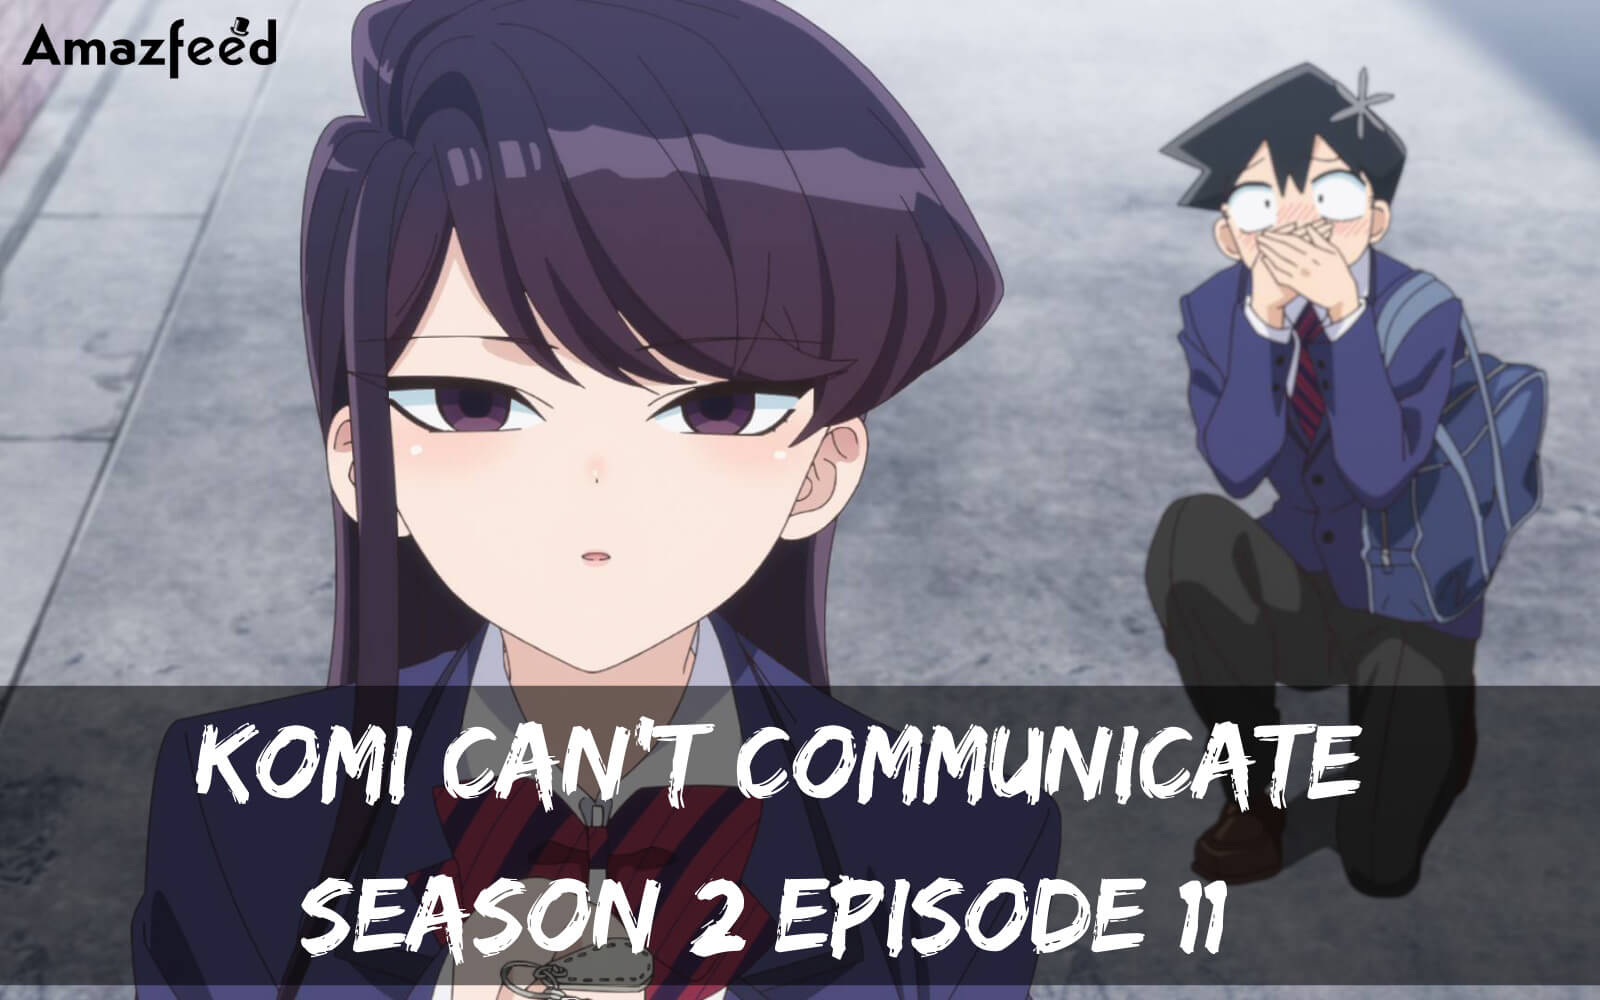 Komi Can’t Communicate Season 2 Episode 11 release date